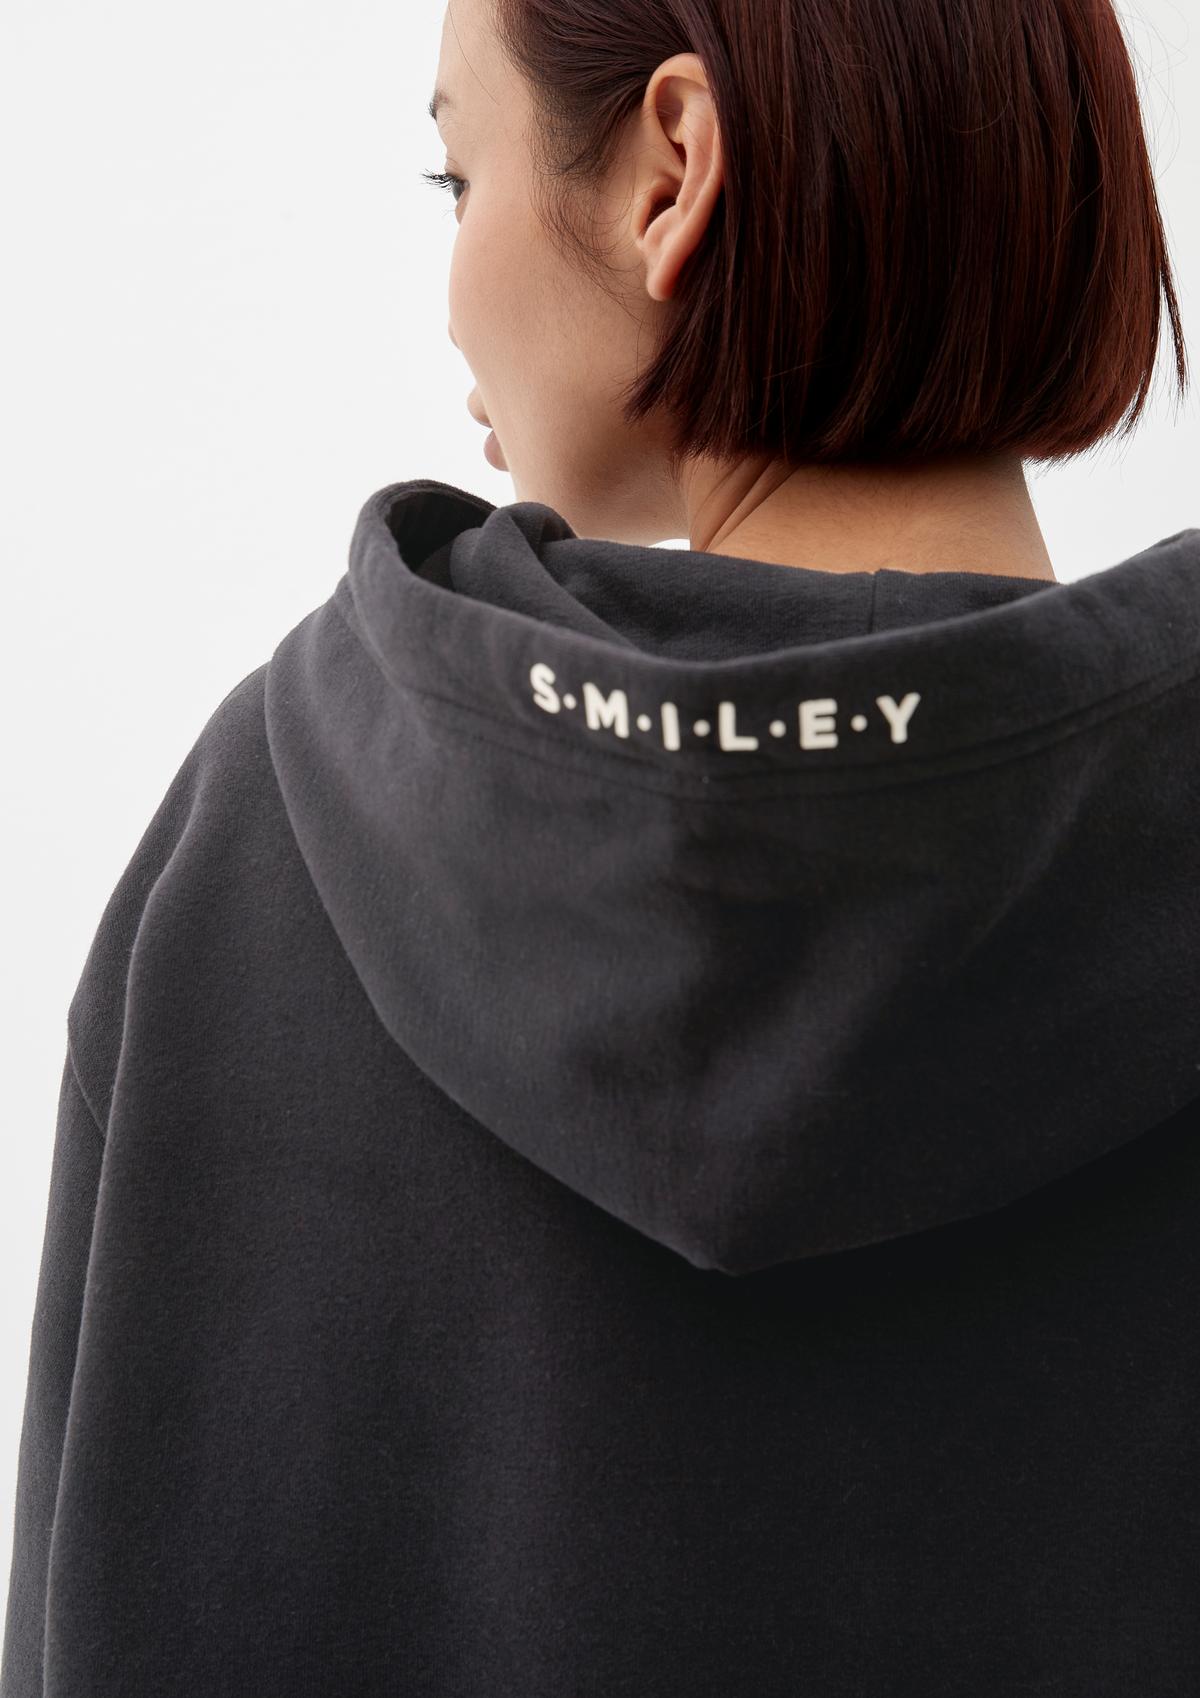 Langer Sweater mit Smiley®-Print olivgrün 